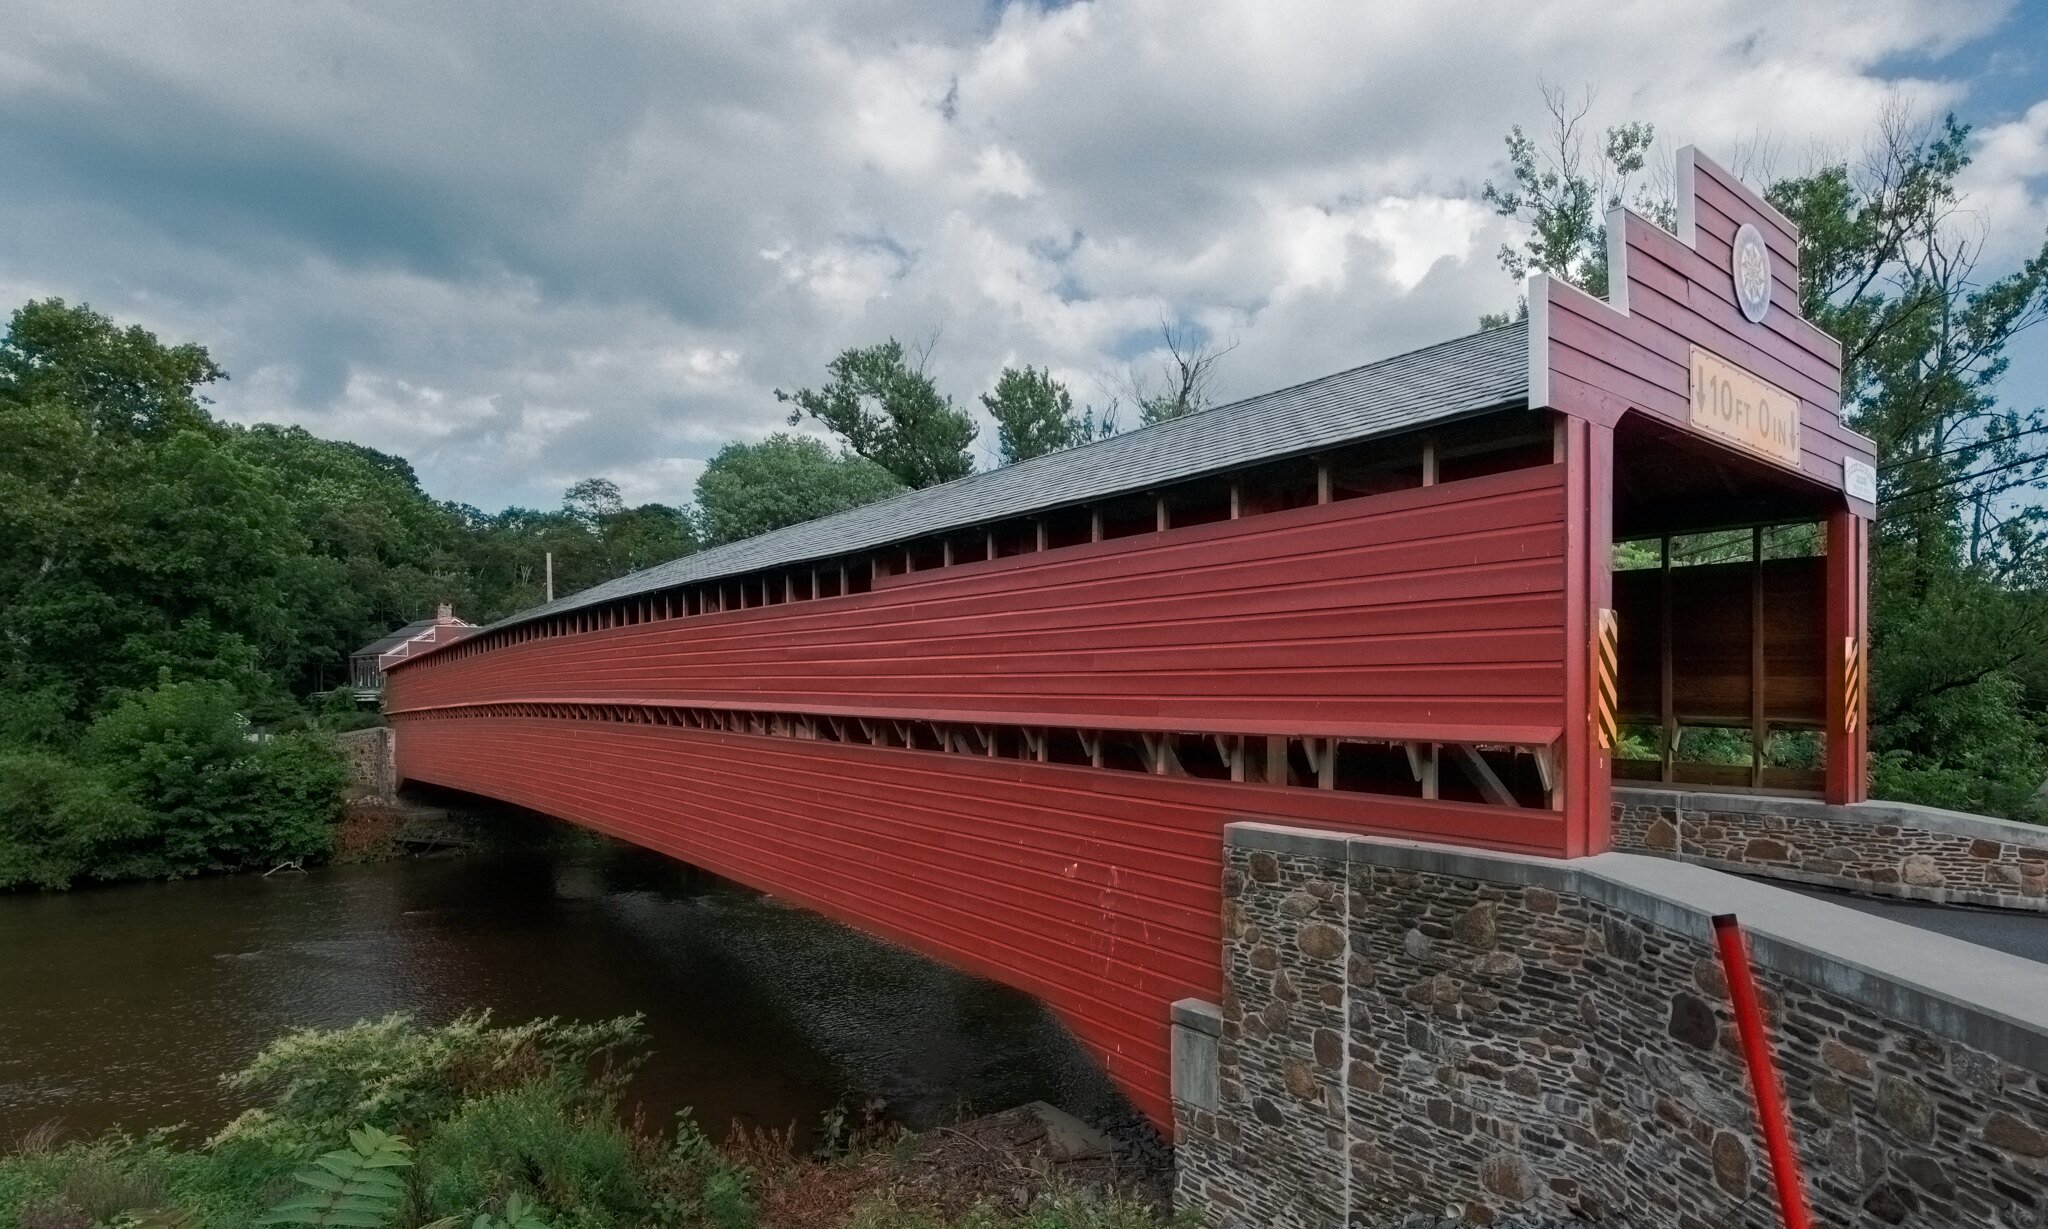  Dreibelbis Station Covered Bridge in Lengartsville, Berks County, PA.  Built in 1869 and rebuilt in 2020.  